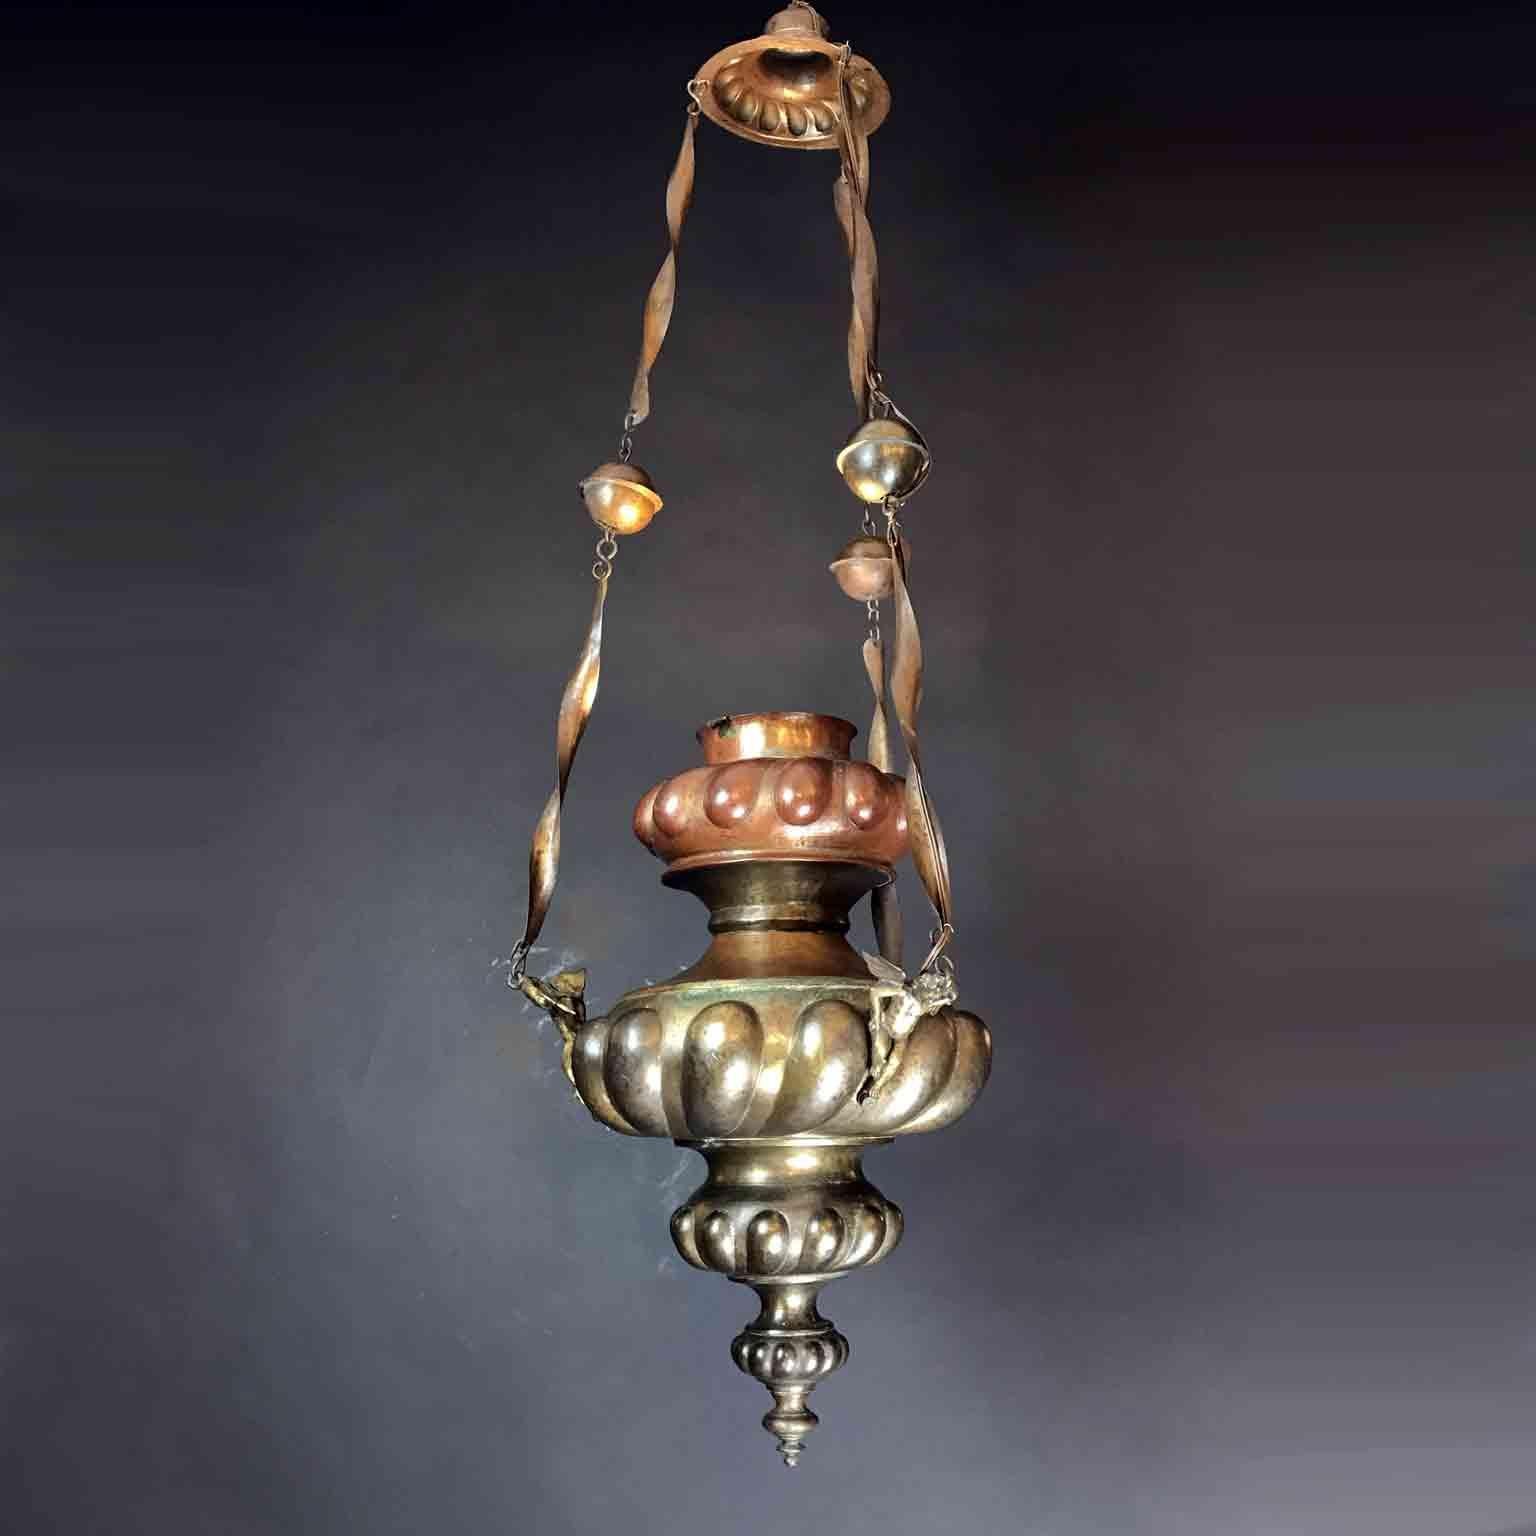 Lampada Liturgica Lanterna Italiana Tonda in Rame Sbalzato con Putti 1880 circa In Good Condition For Sale In Milan, IT